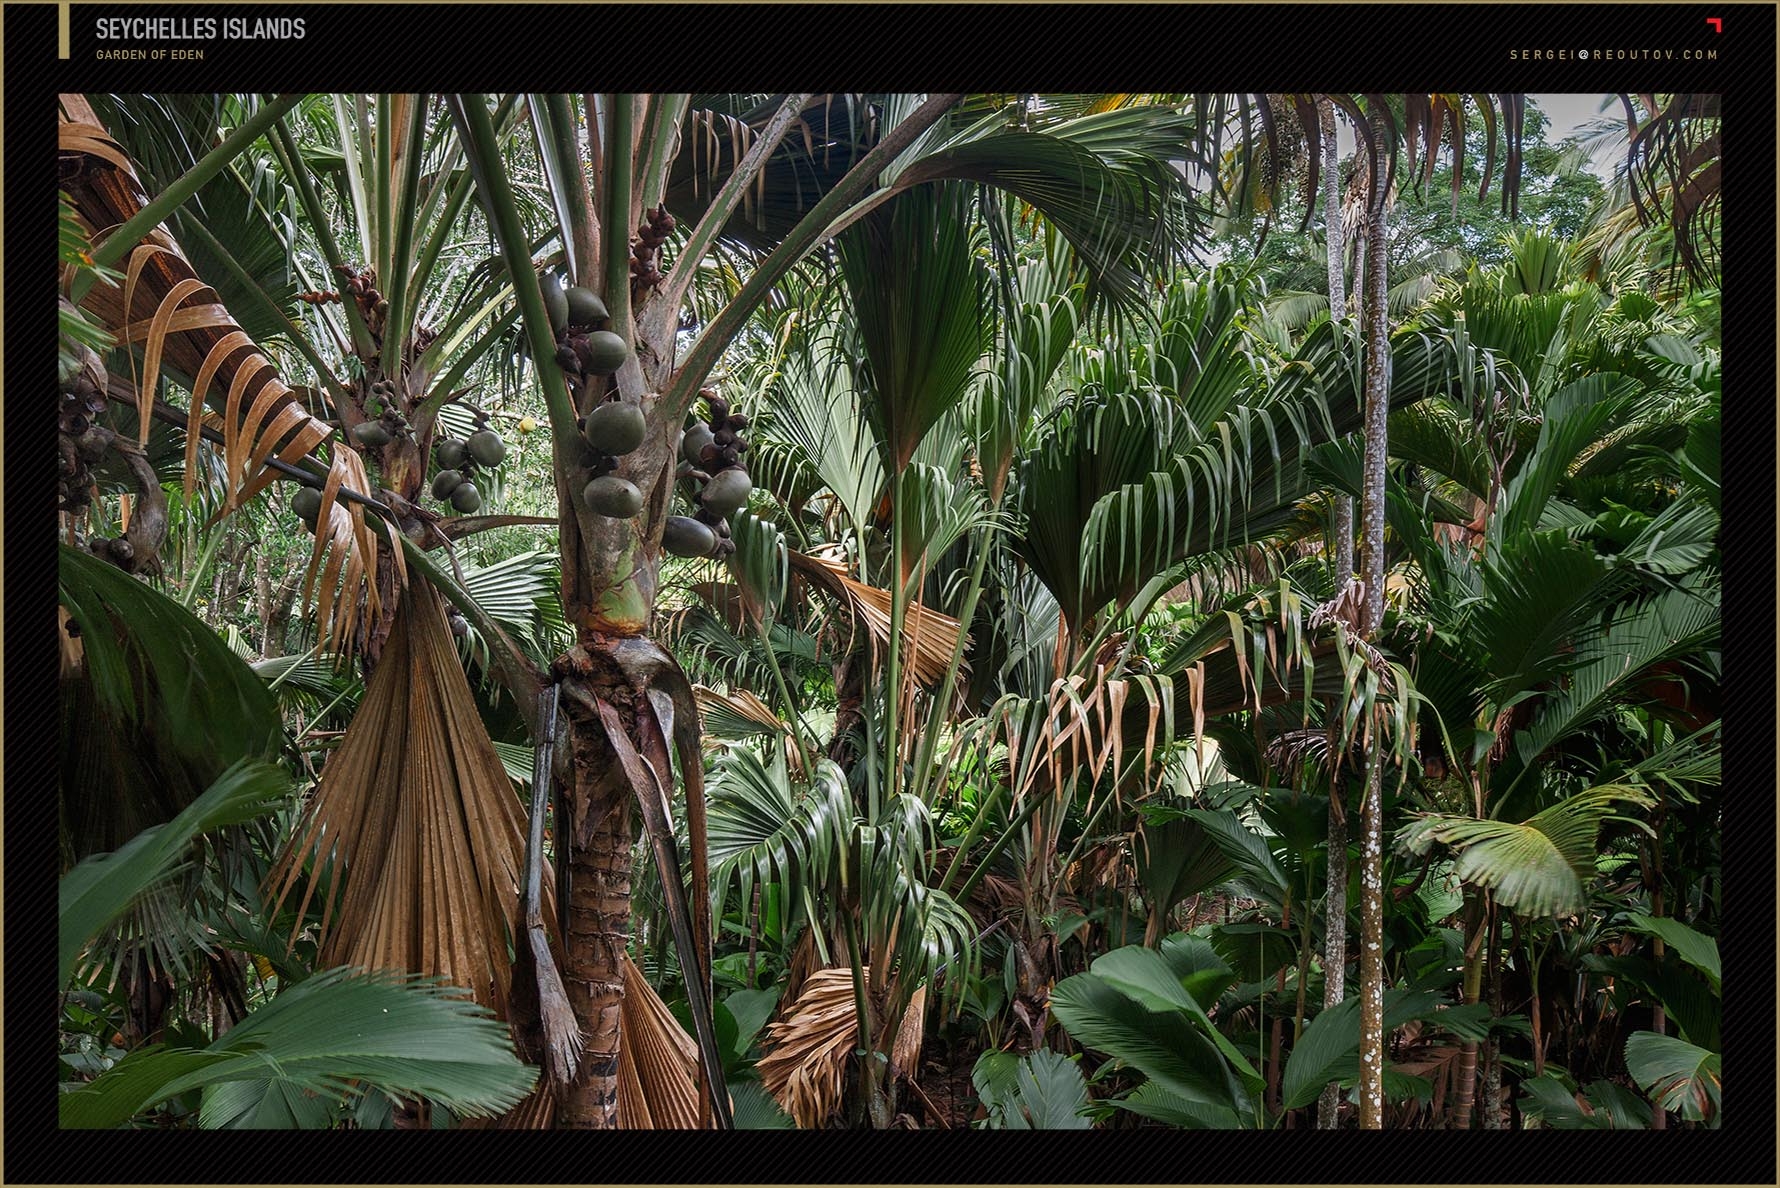 Coco de mer palm at Vallee de Mai forest